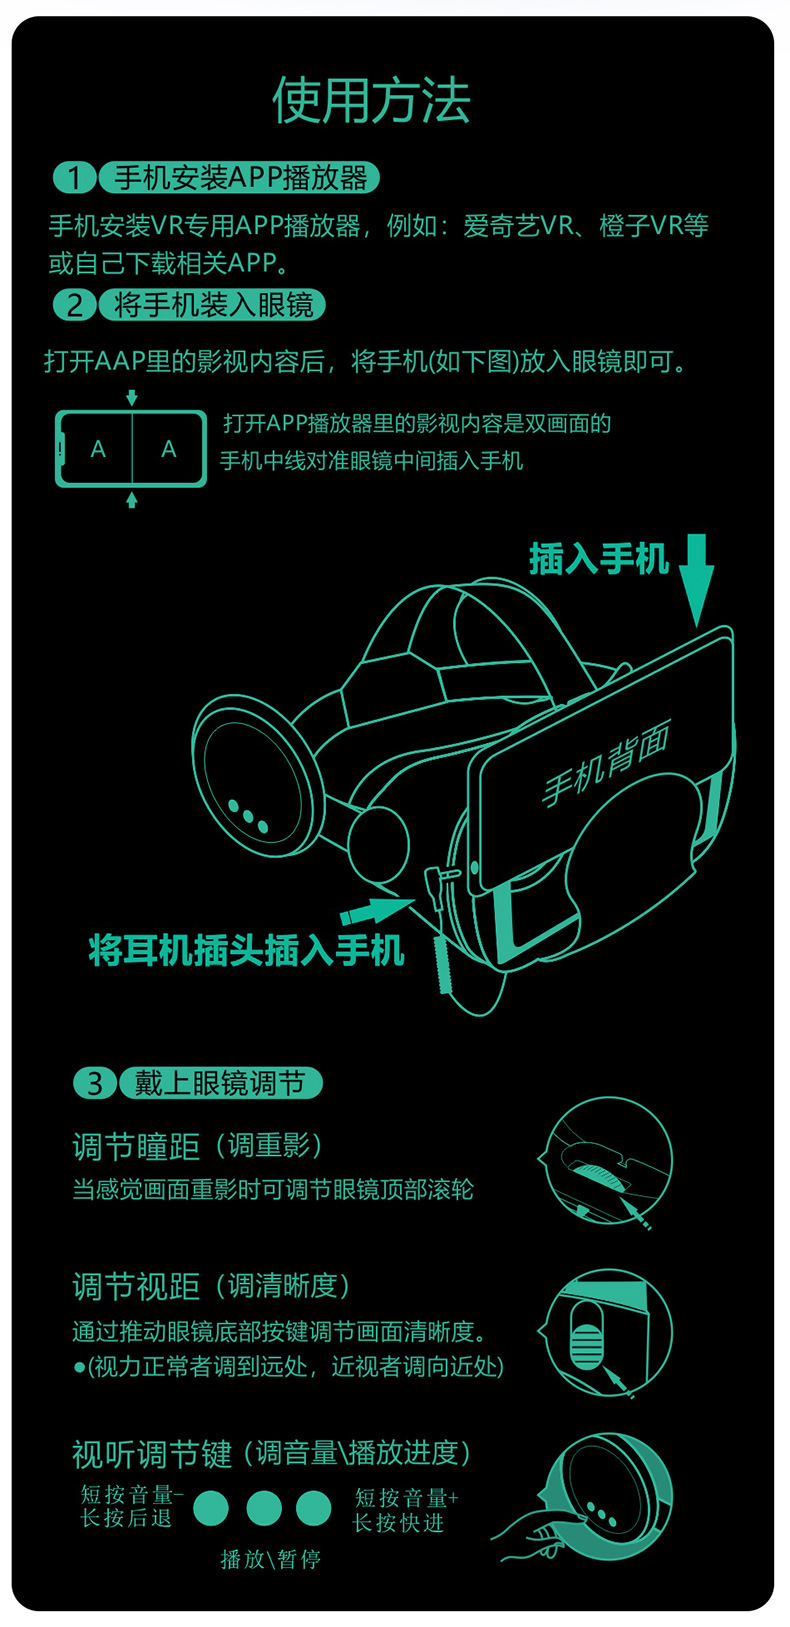 VRG PRO vr眼镜蓝光护眼手机虚拟现实头盔3D VR眼镜外贸热销详情50